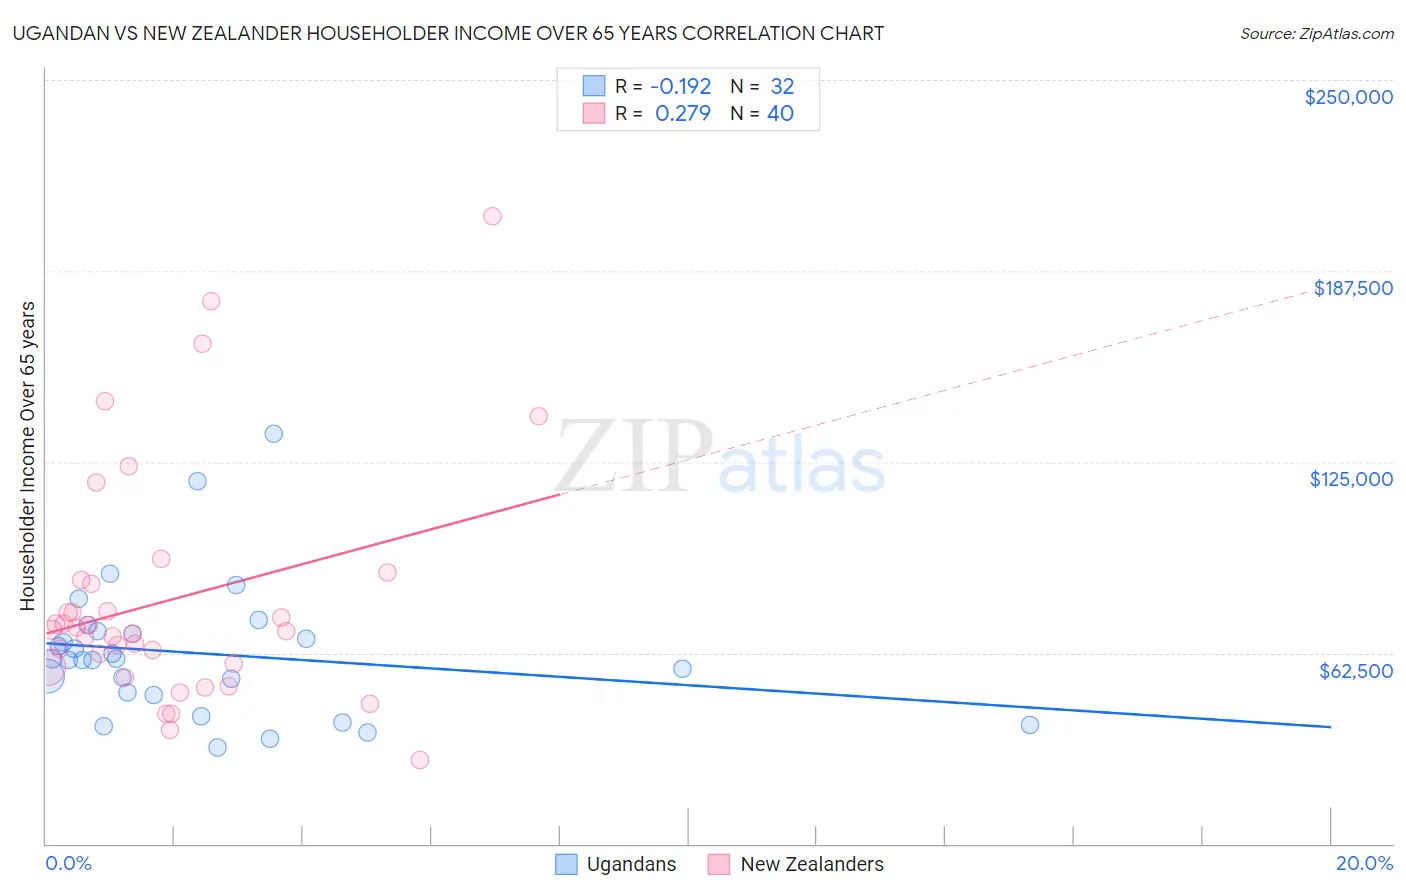 Ugandan vs New Zealander Householder Income Over 65 years